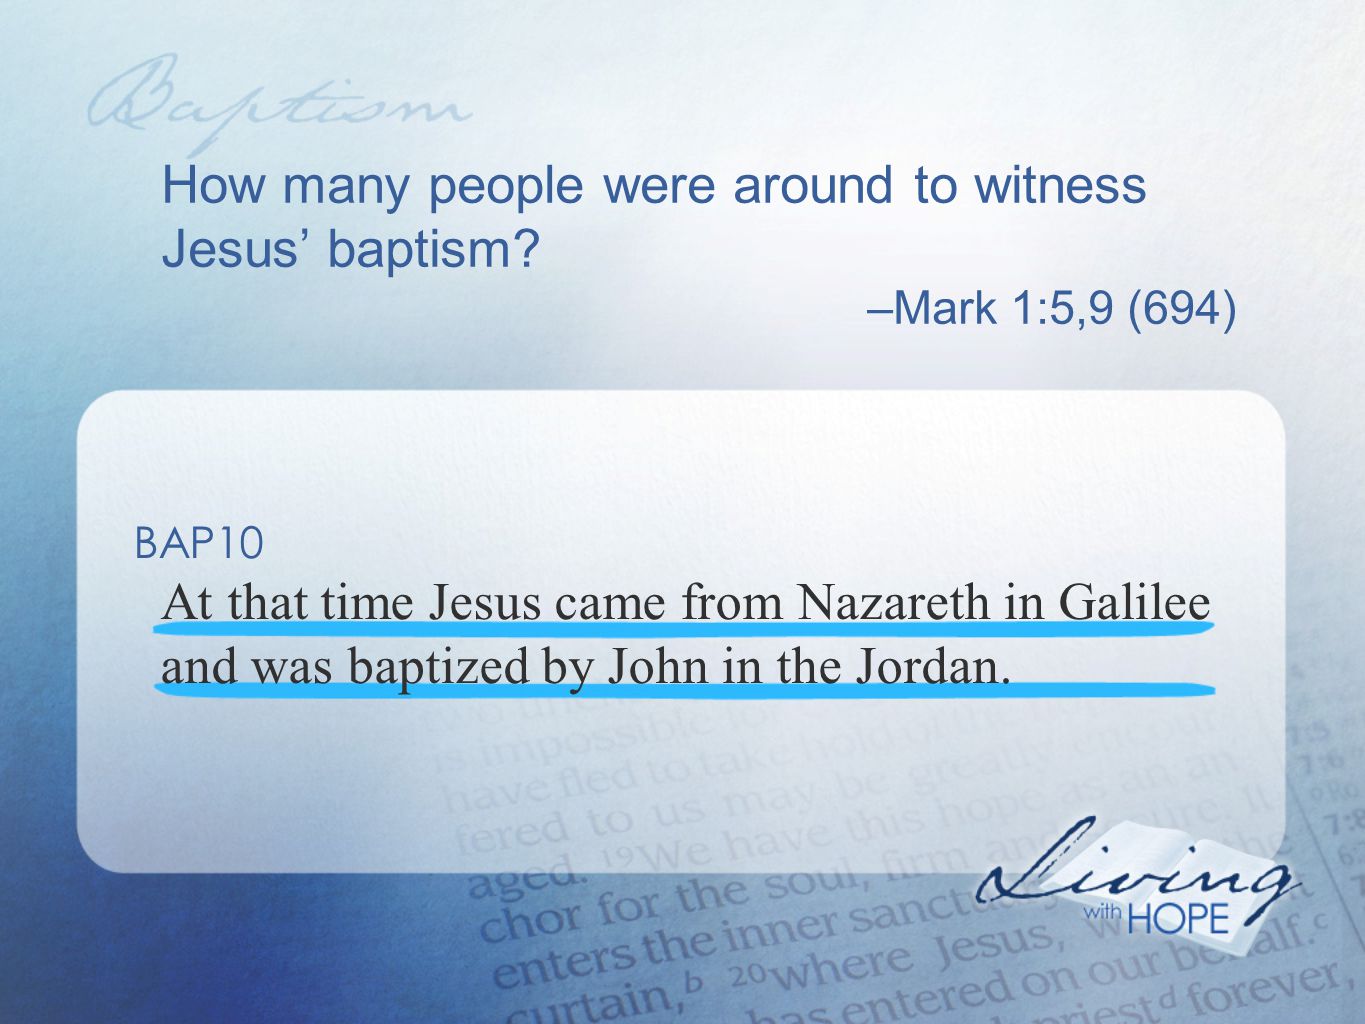 How many people were around to witness Jesus’ baptism.